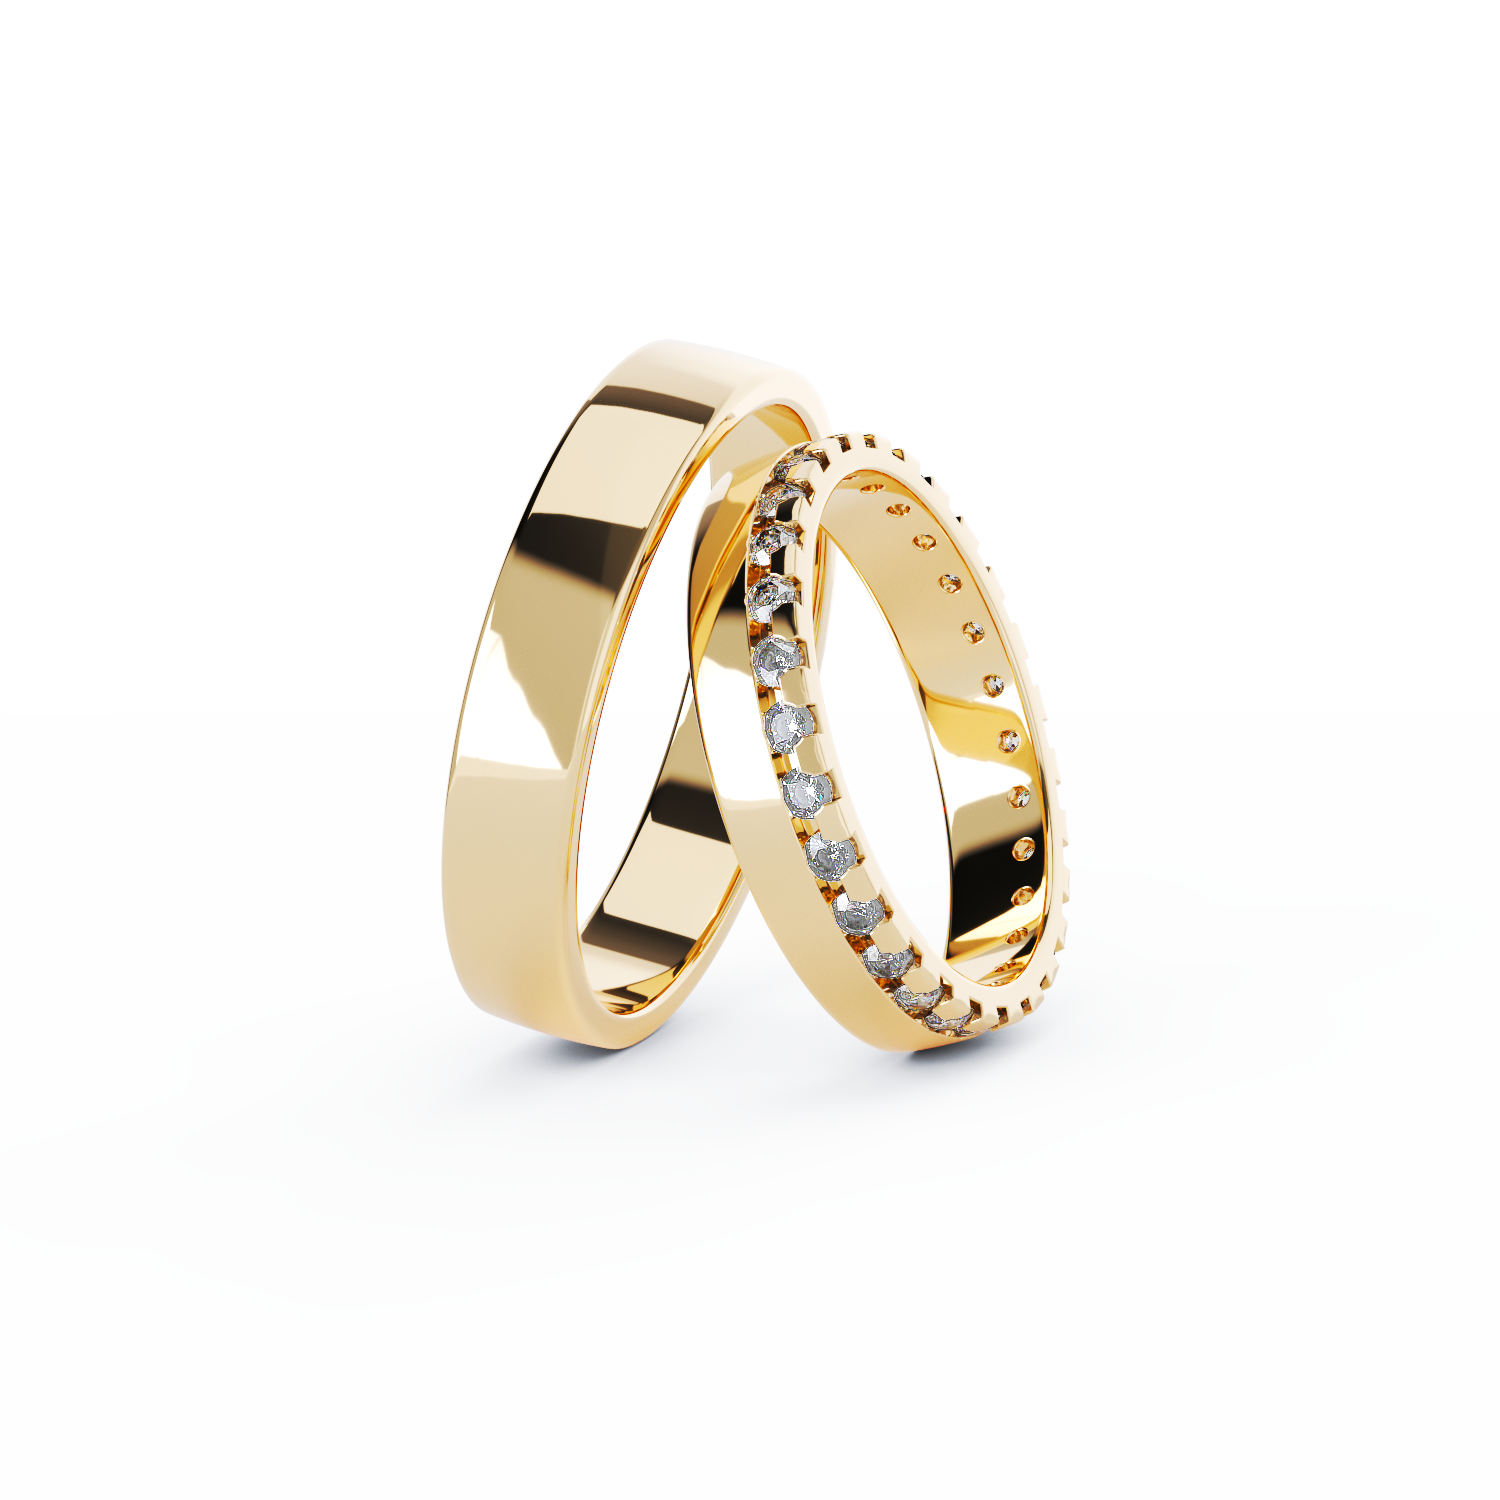 HALO gold wedding rings